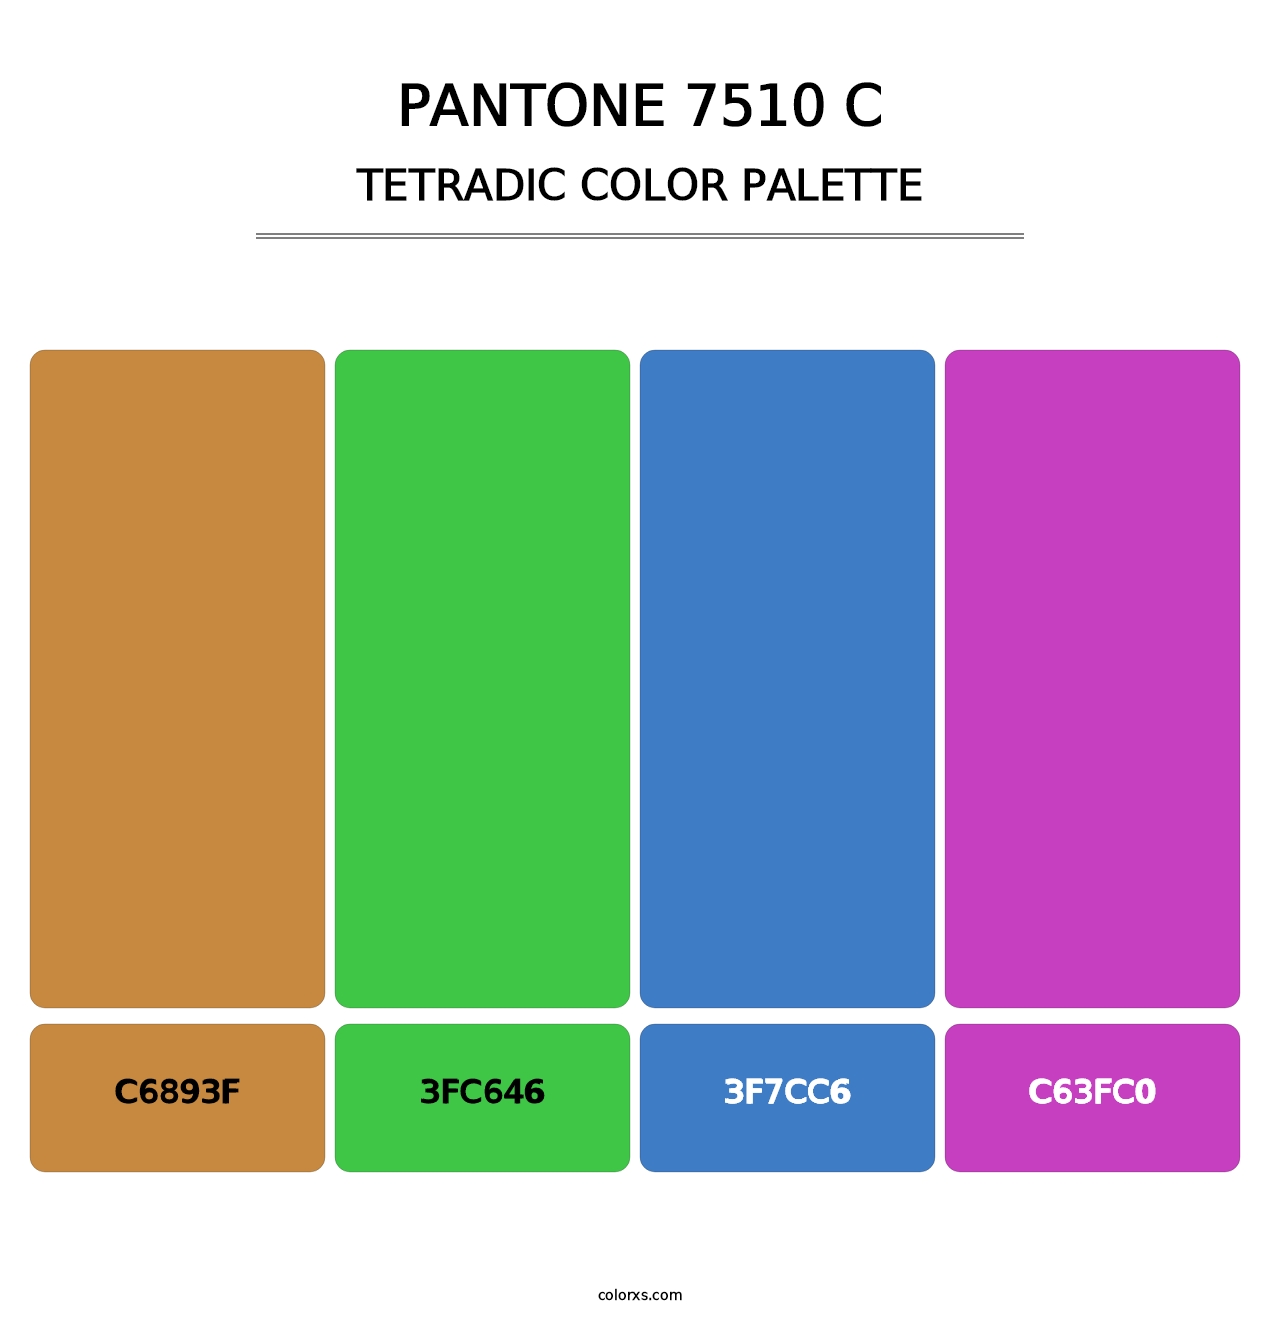 PANTONE 7510 C - Tetradic Color Palette